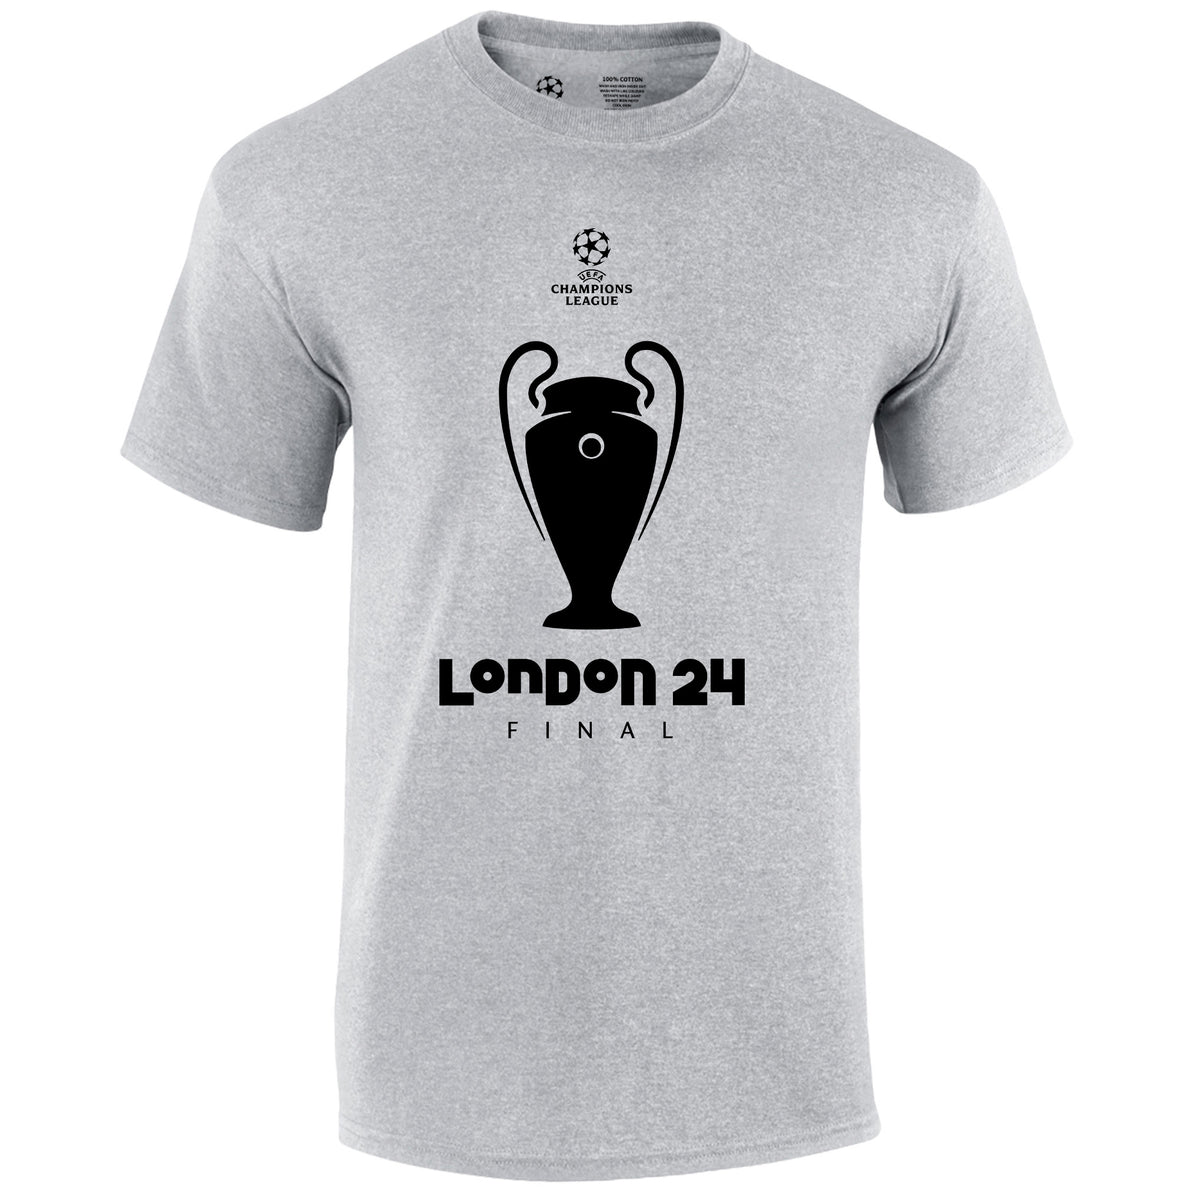 Champions League Trophy London 2024 T-Shirt Grey